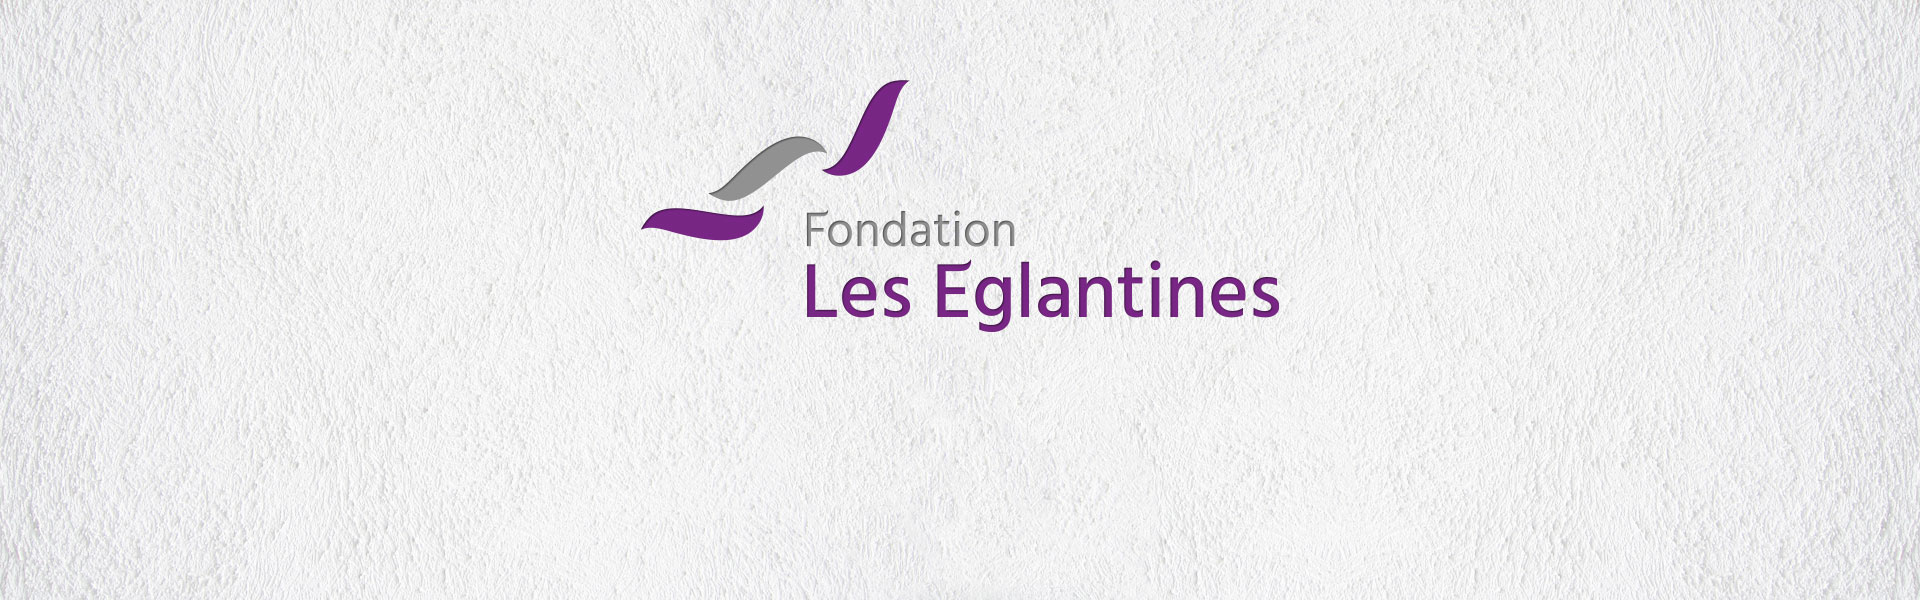 Slide Fondation Les Eglantines